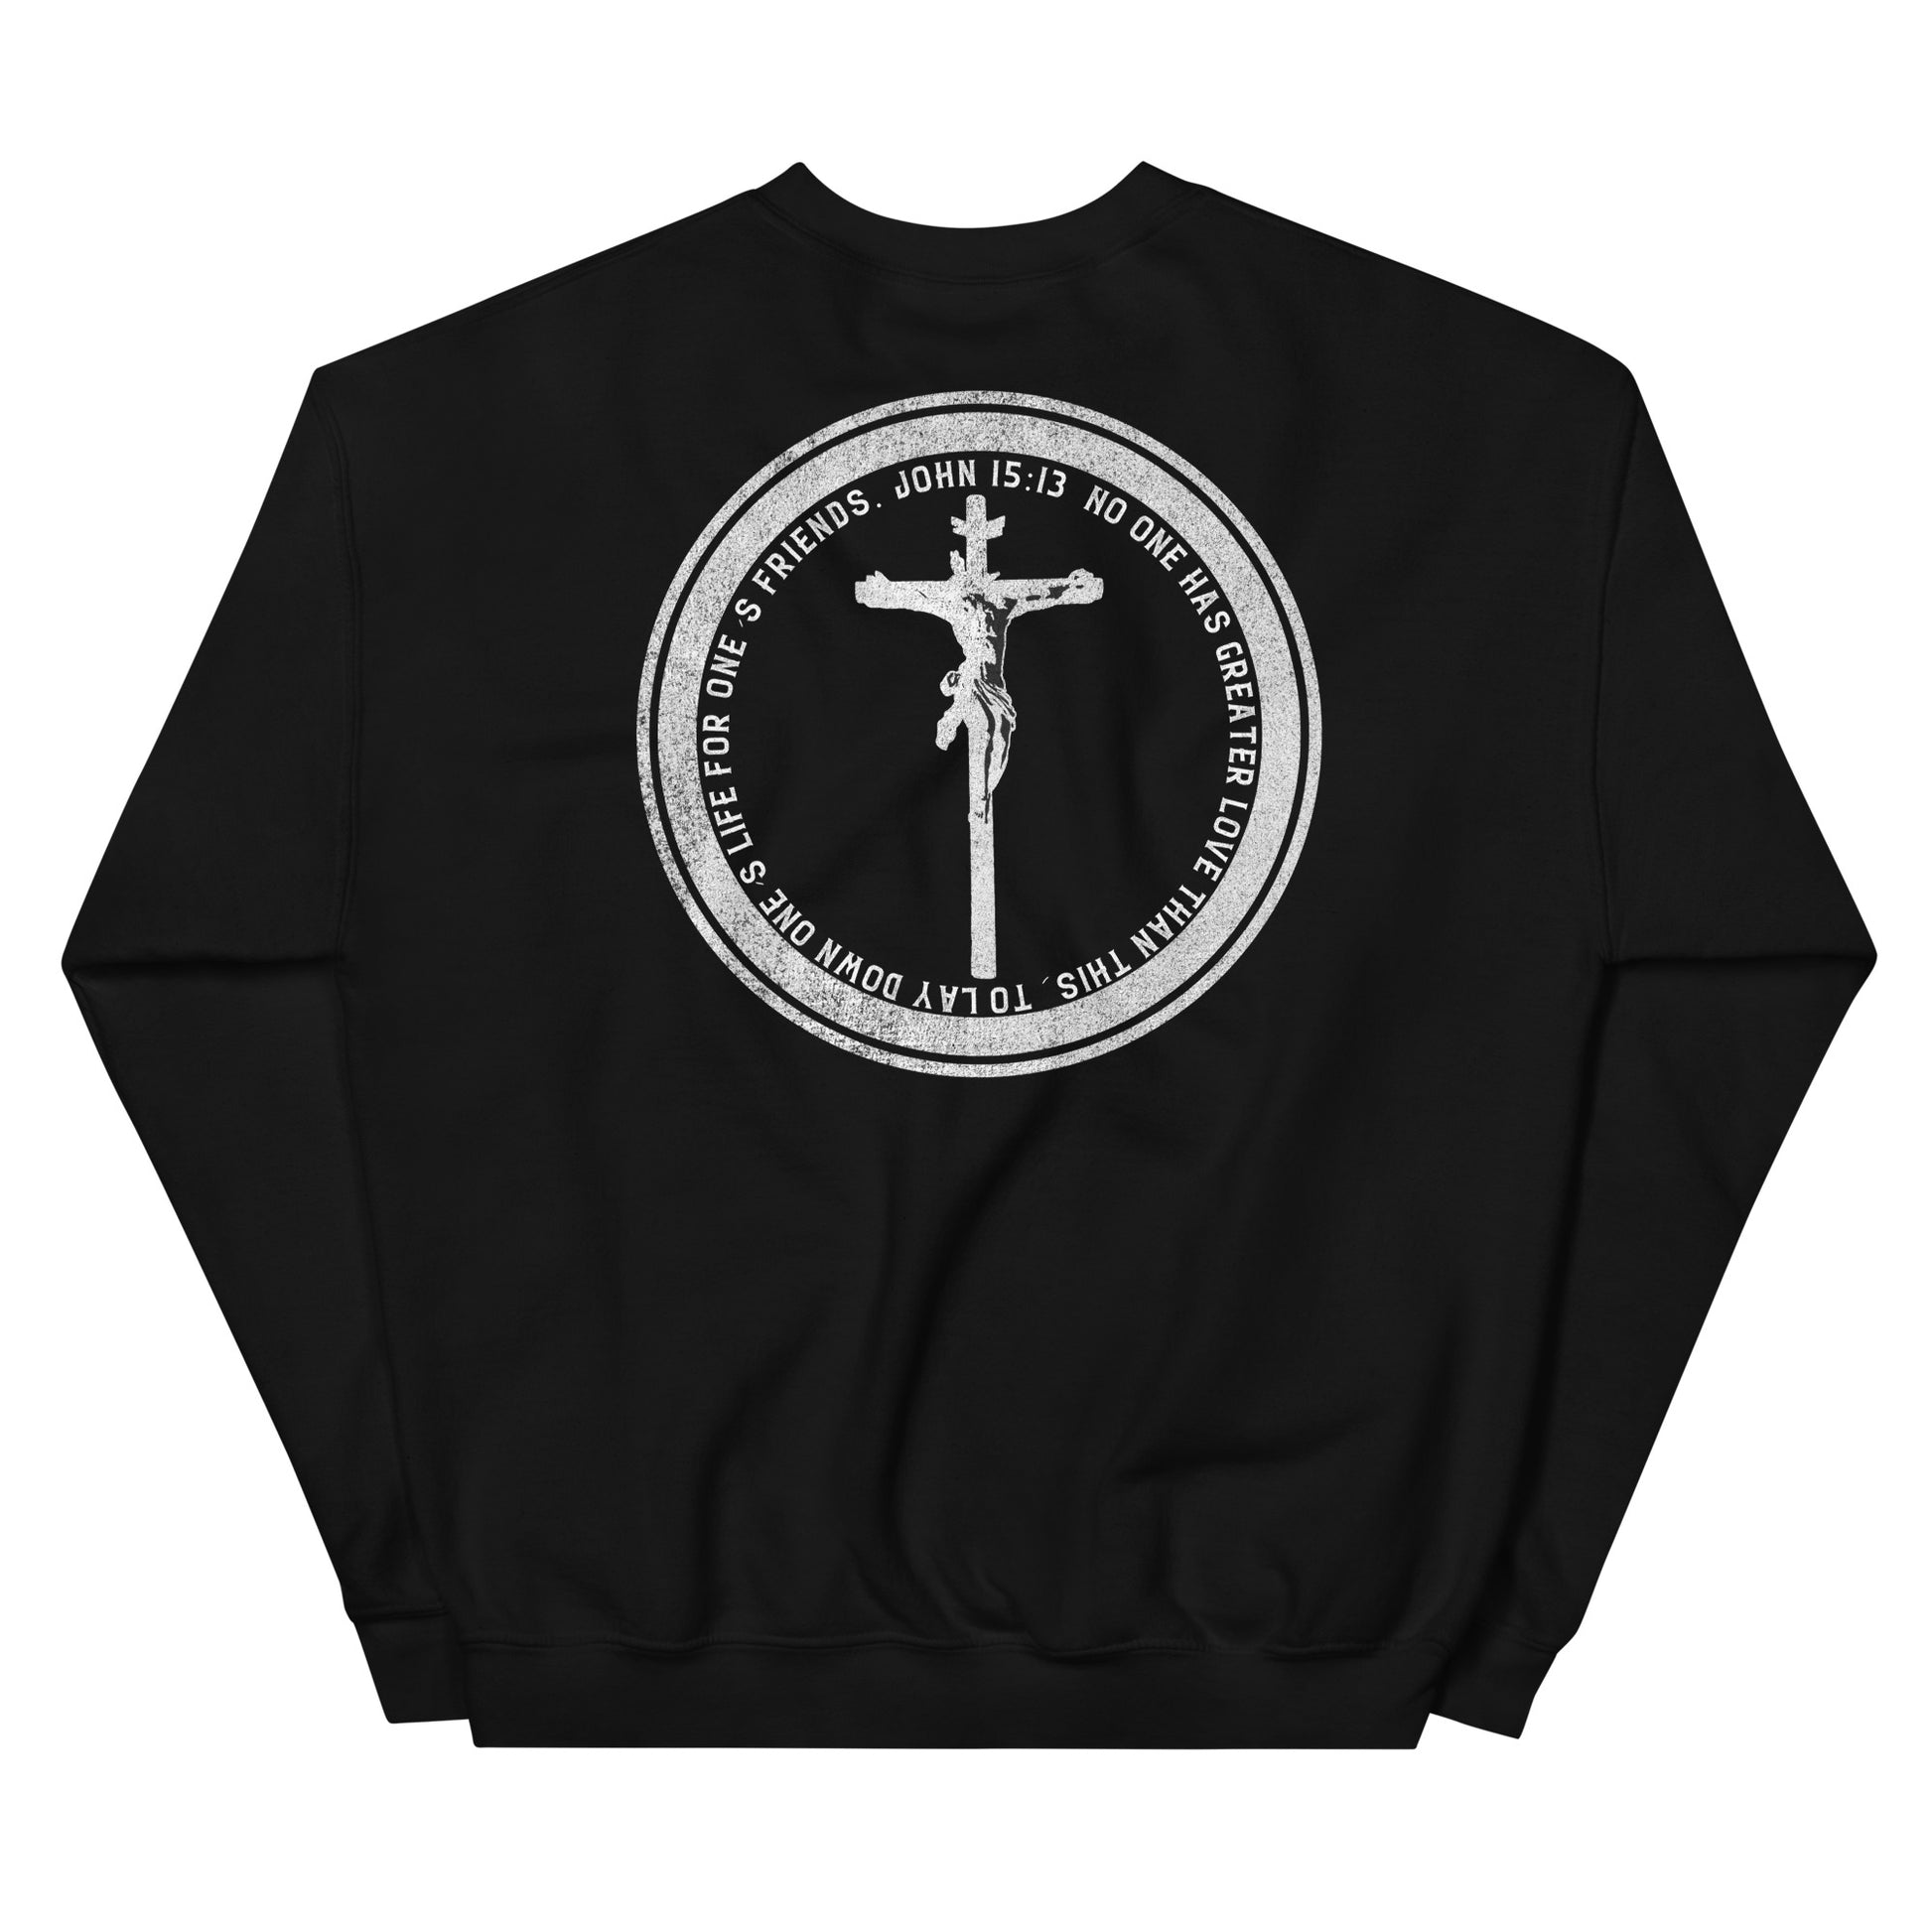 Jesus on the Cross sweatshirt